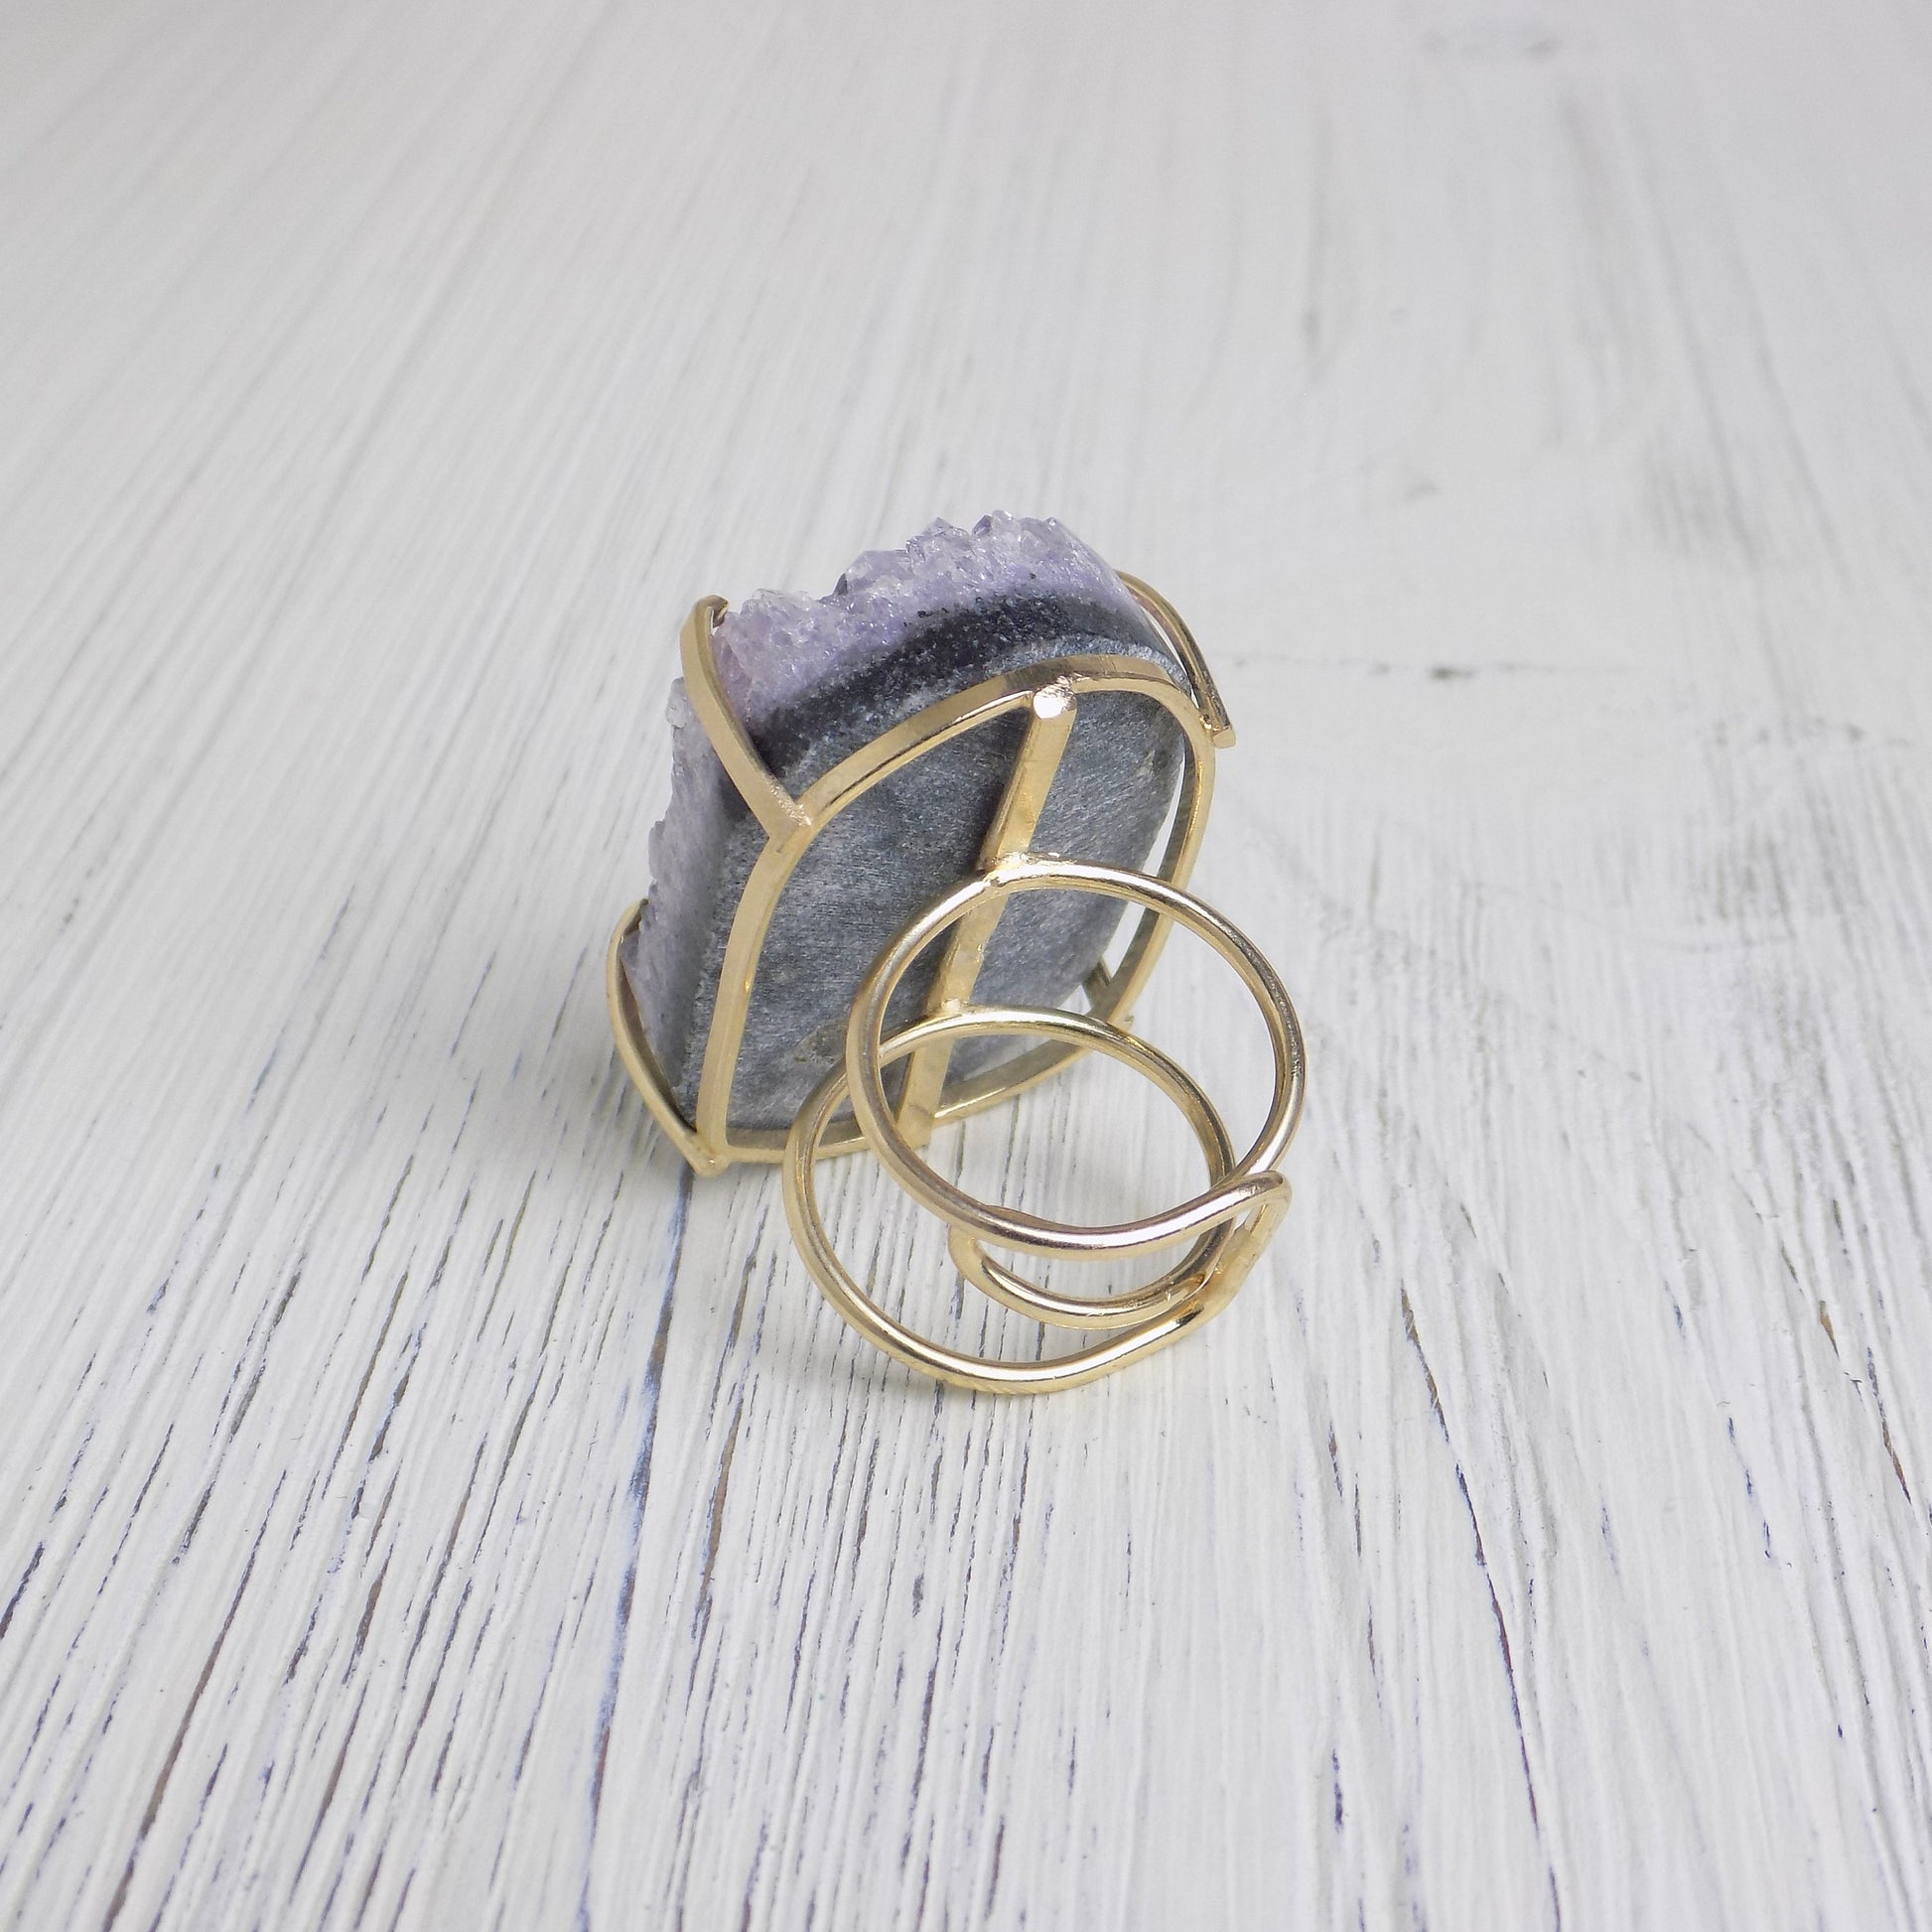 Large Amethyst Statement Ring, Raw Amethyst Druzy Ring Adjustable, Lavender Crystal Ring, Christmas Gift Women, G14-236